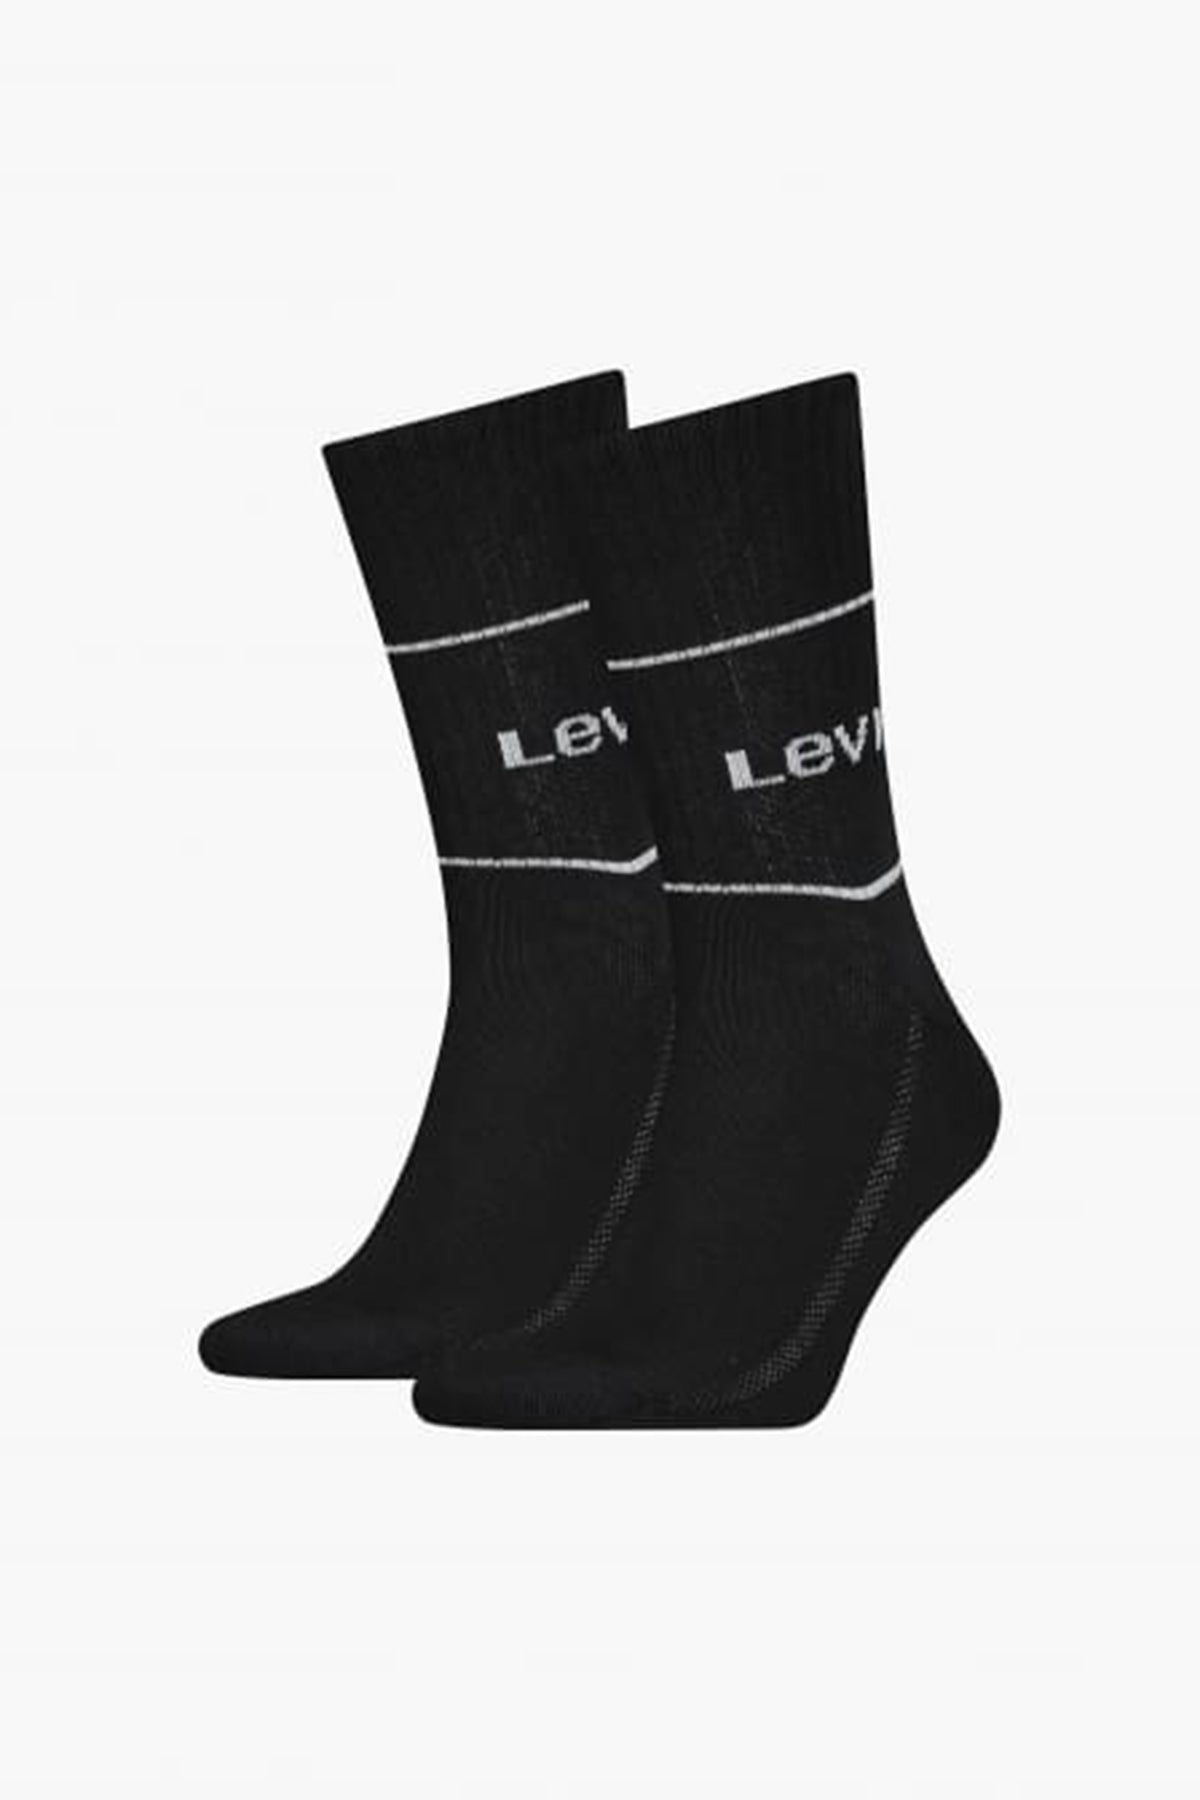 Levi's Organik Pamuklu 2 Pack Uzun Erkek Çorap 37157-0666 SİYAH